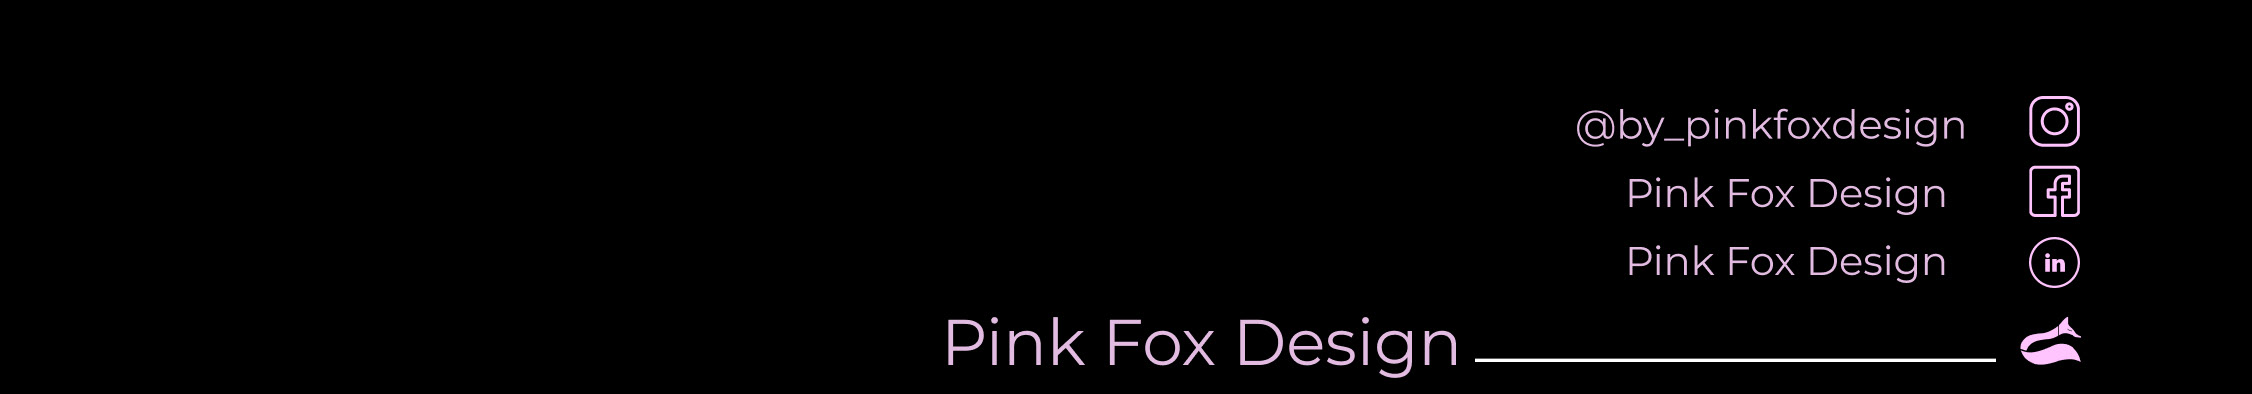 Pink Foxs profilbanner